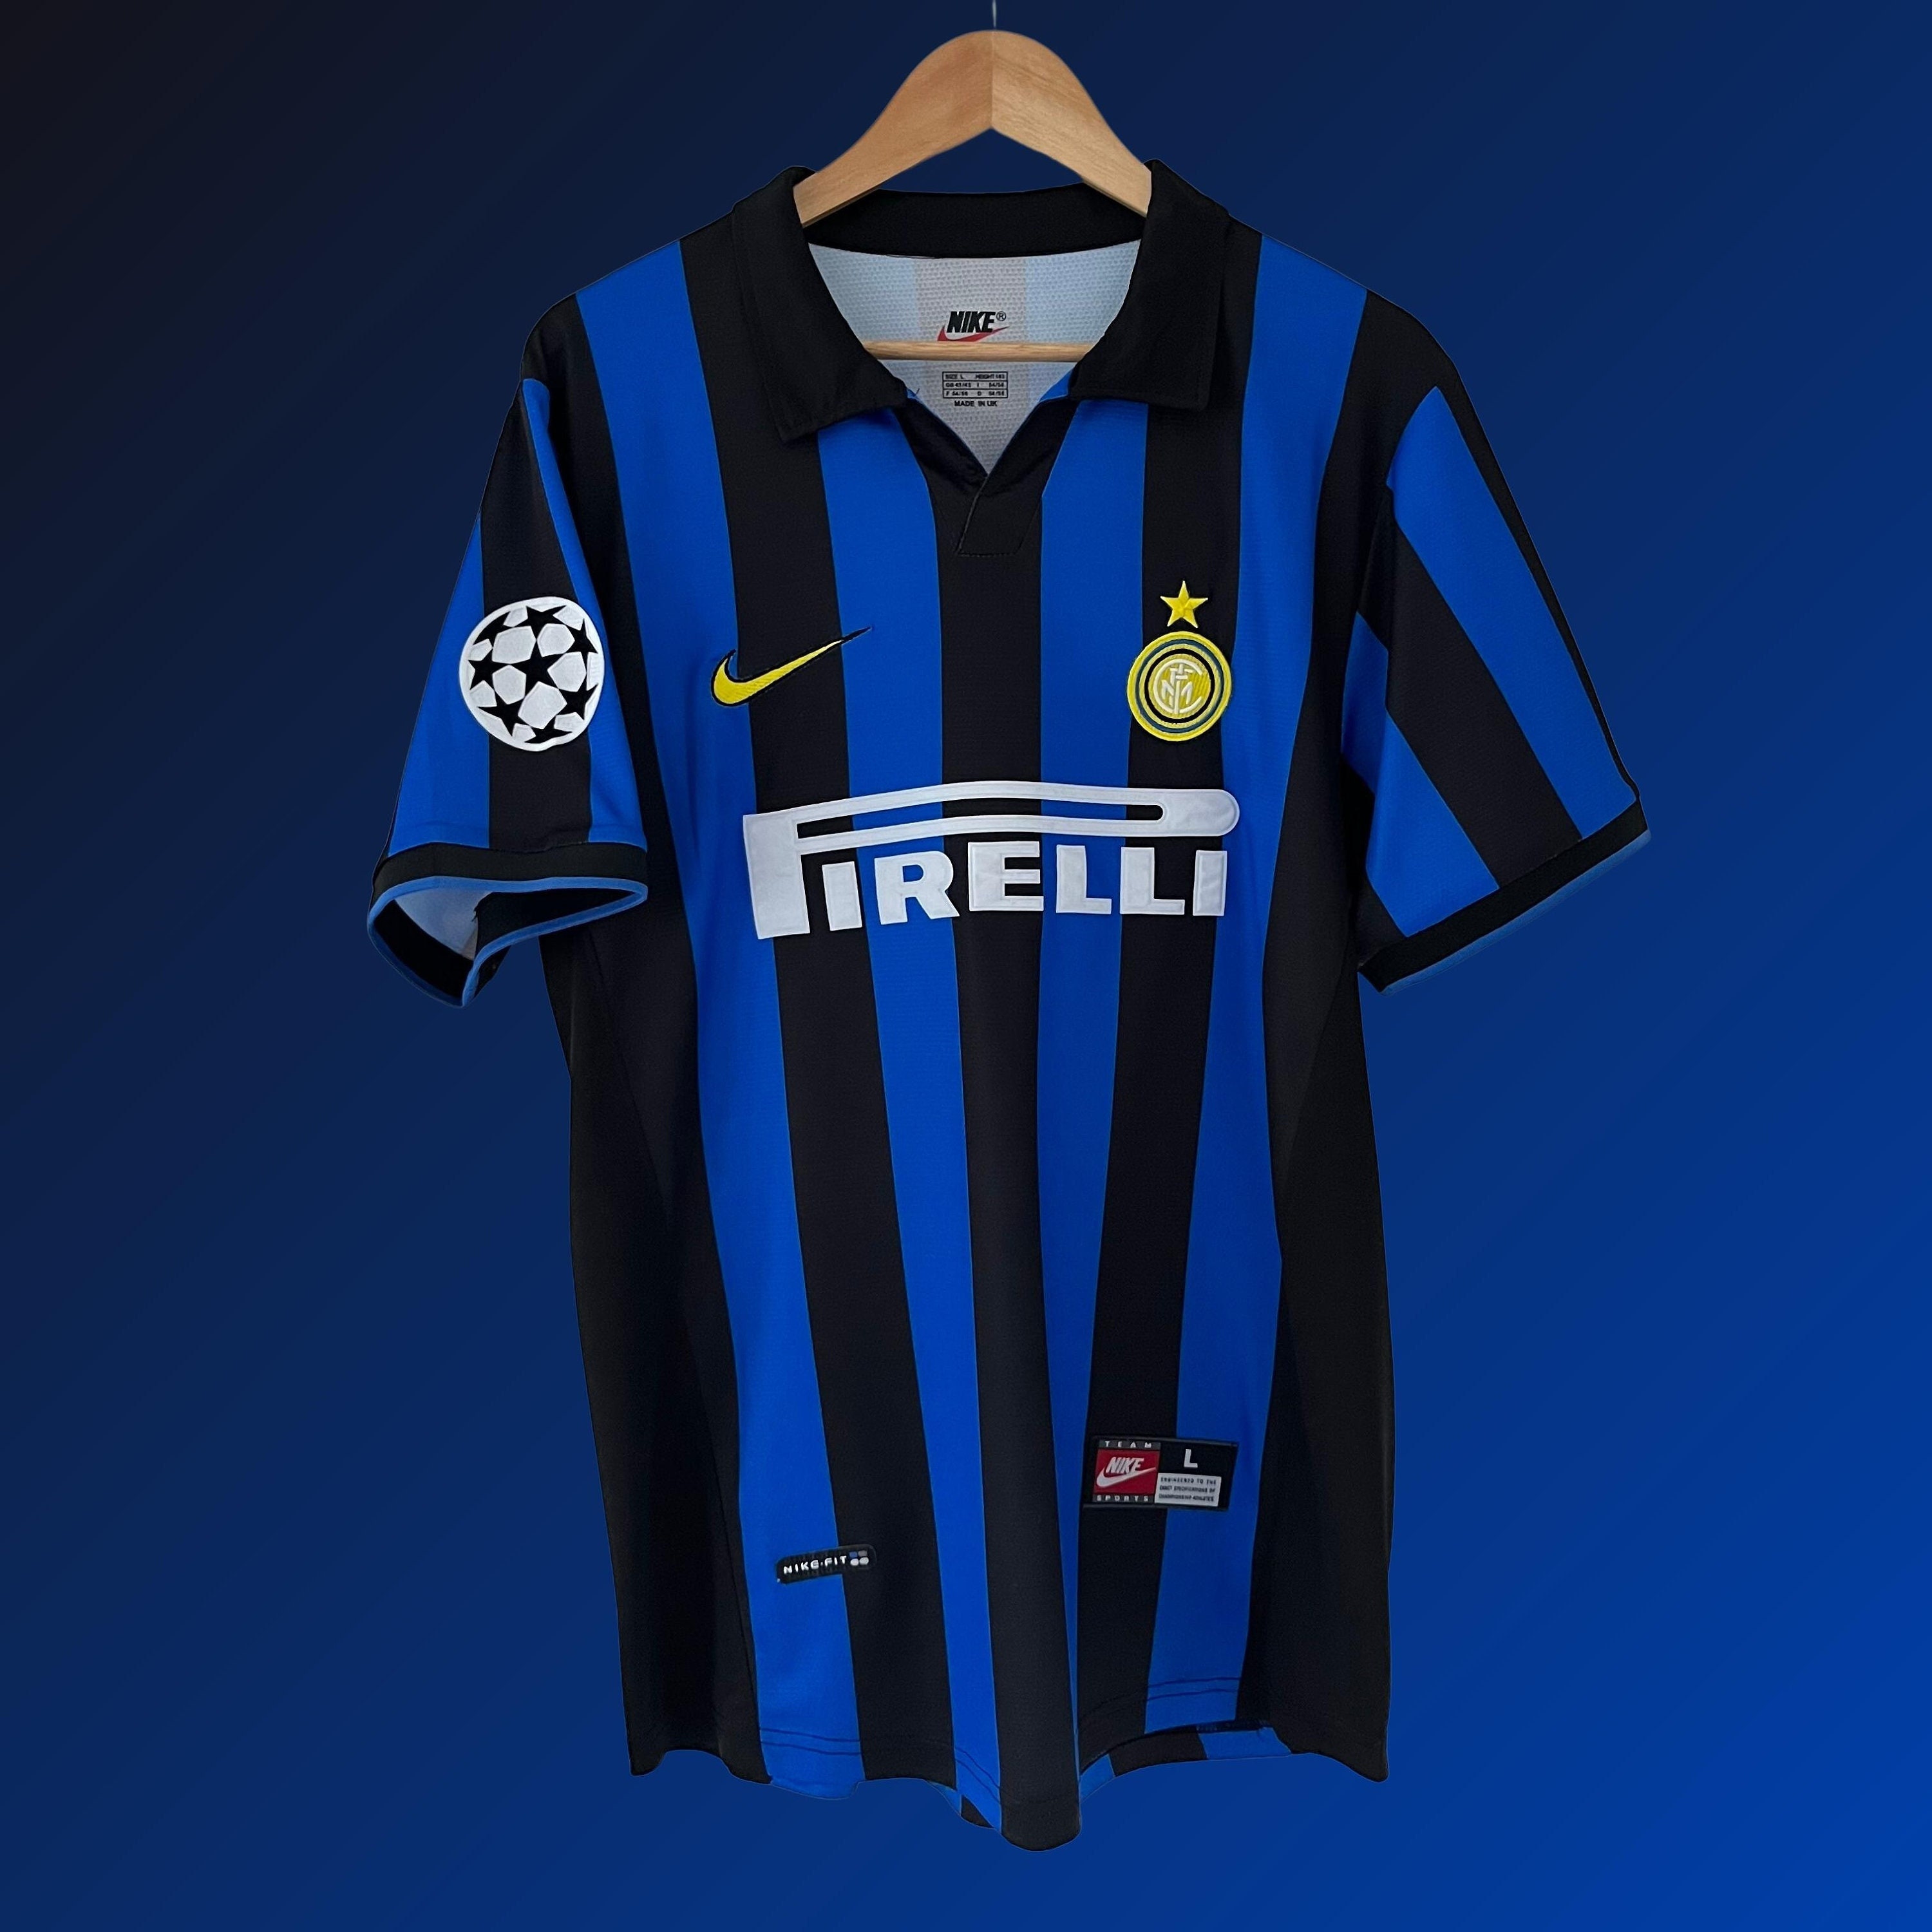 Inter Milan 1998 1999 Home football shirt ERA RONALDO soccer jersey Nike sz  L